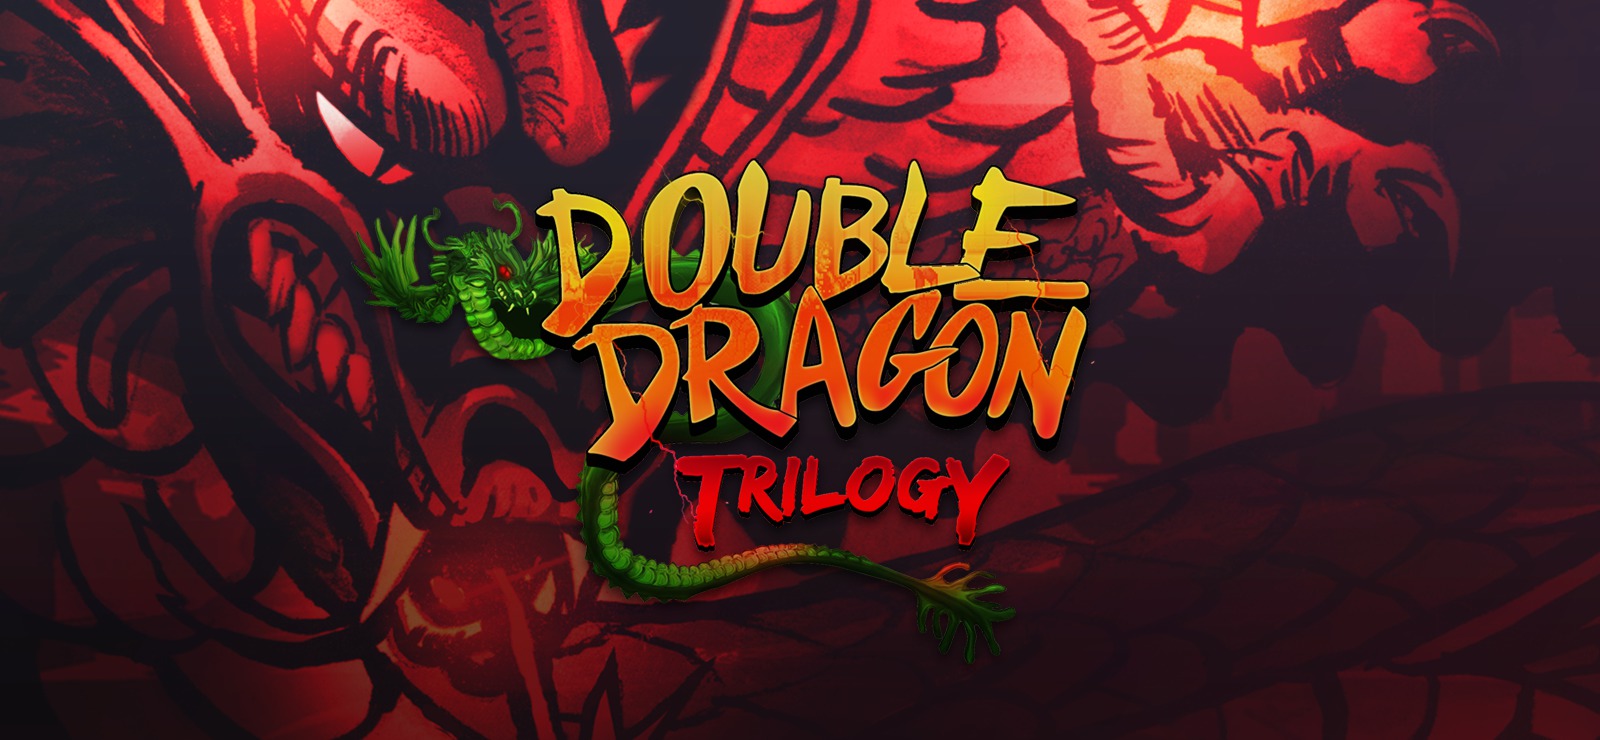 Double Dragon Trilogy HD wallpapers, Desktop wallpaper - most viewed